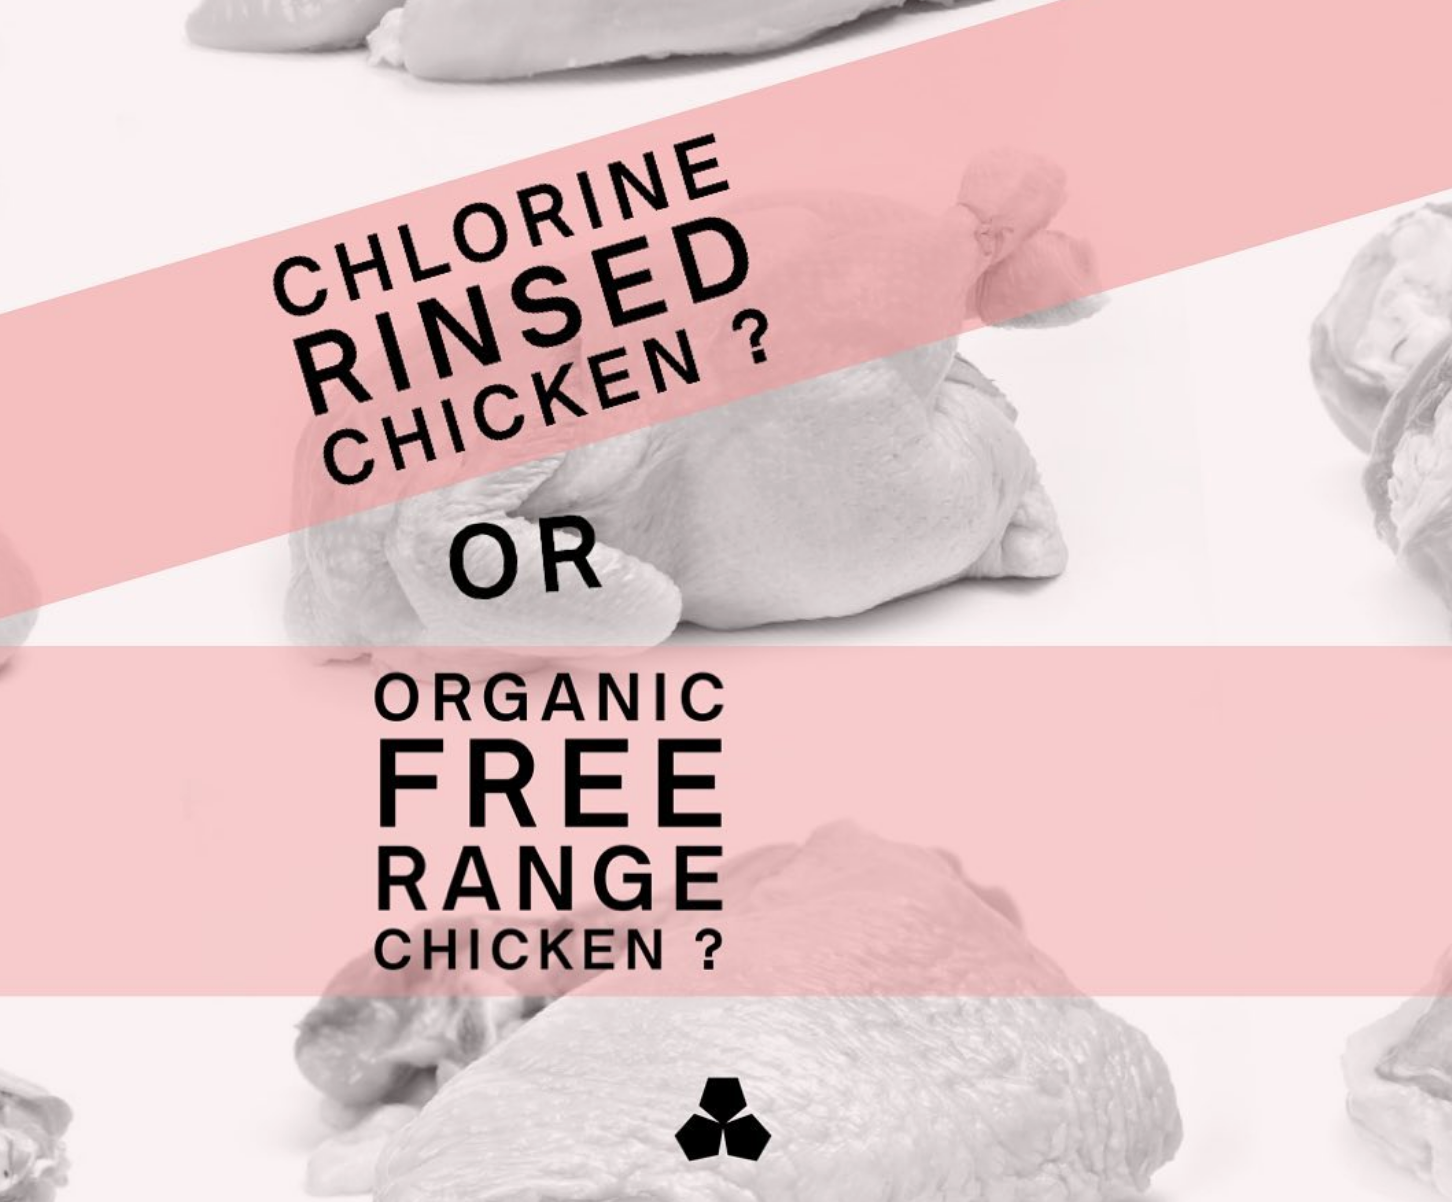 Chlorine Rinsed Chicken or Organic Free Range Chicken?